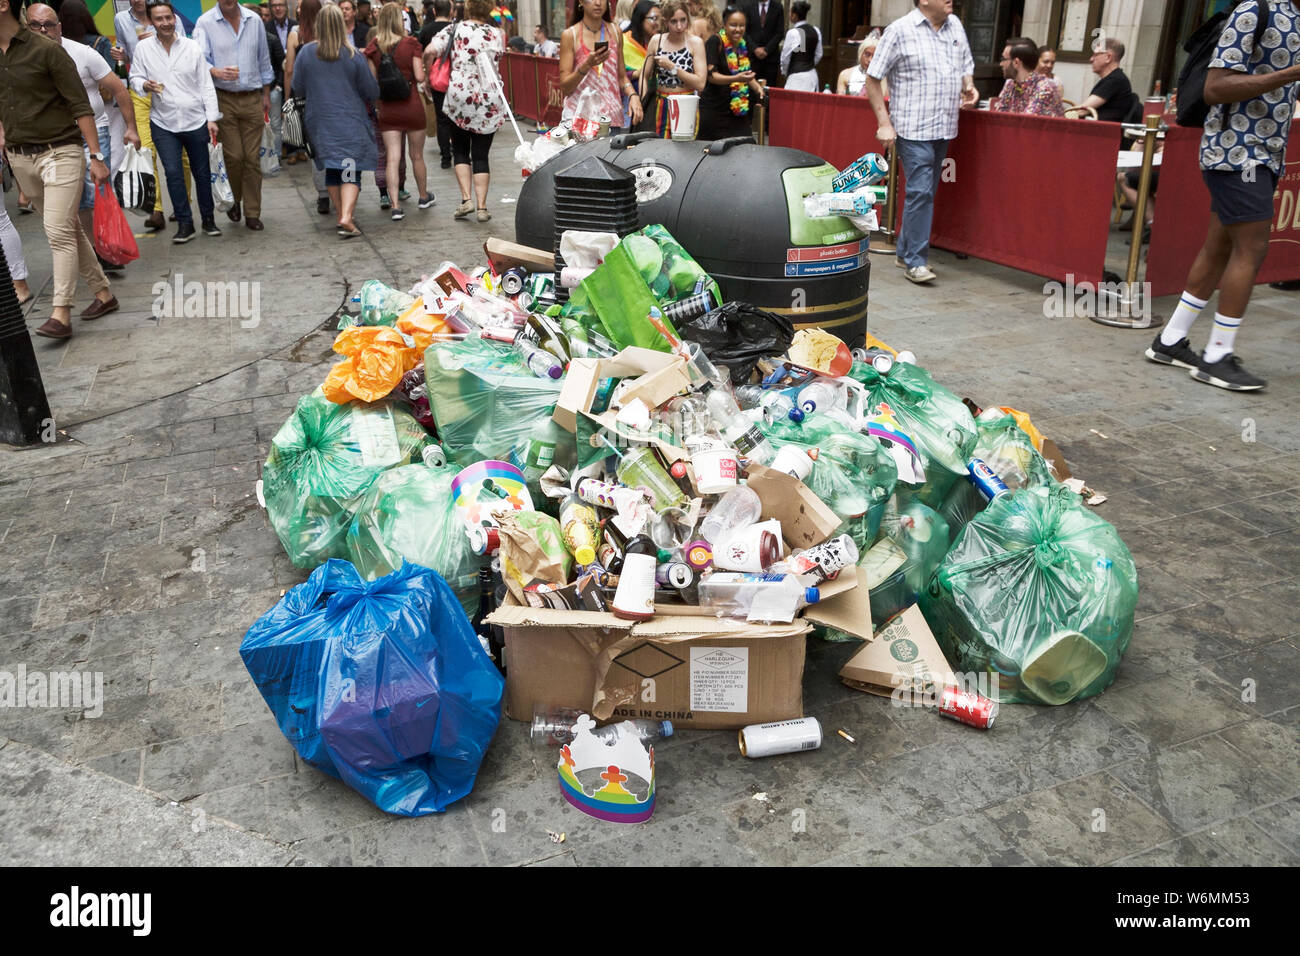 Street rubbish: plastic waste, consumerism, consumer rubbish, consumer waste, bins overflowing. London rubbish. Keep Britain tidy. UK trash. Stock Photo